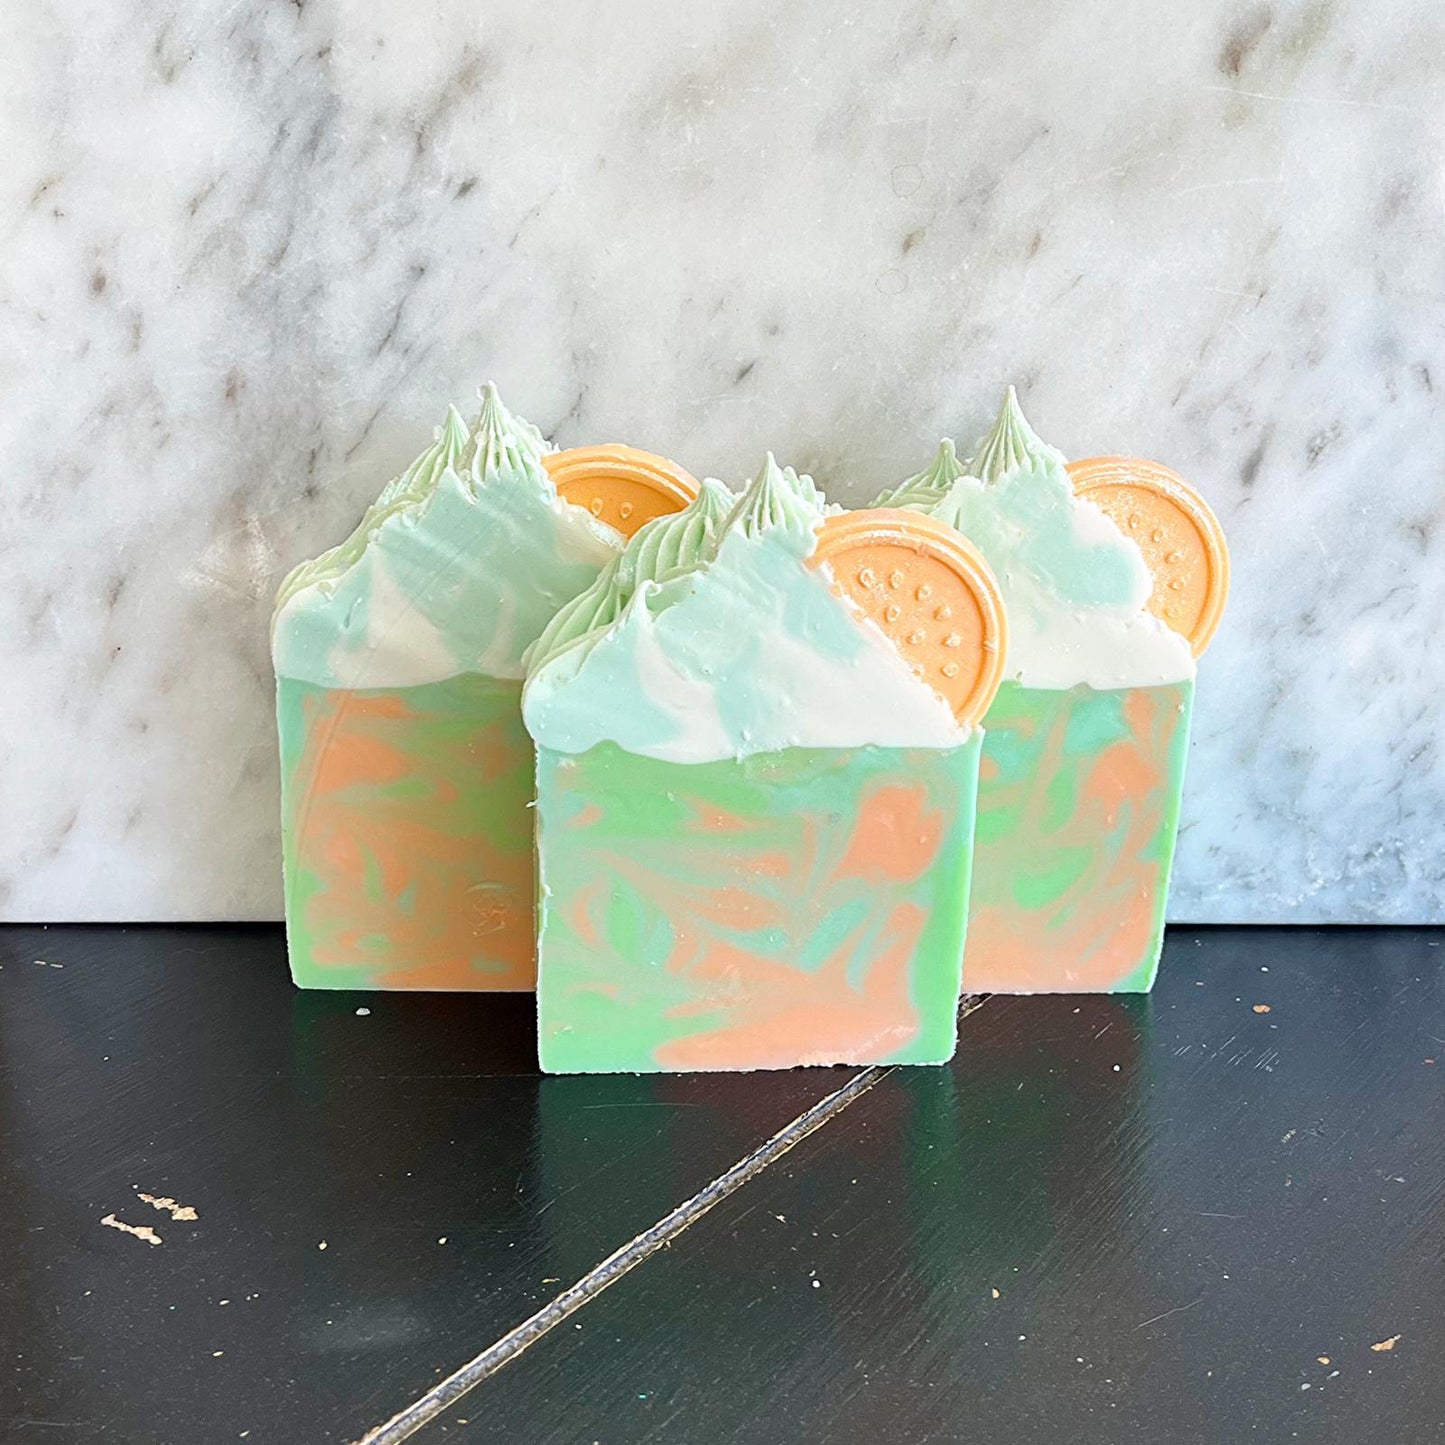 Cucumber and Melon Soap Bar - Artisan Soap - Handmade Soap